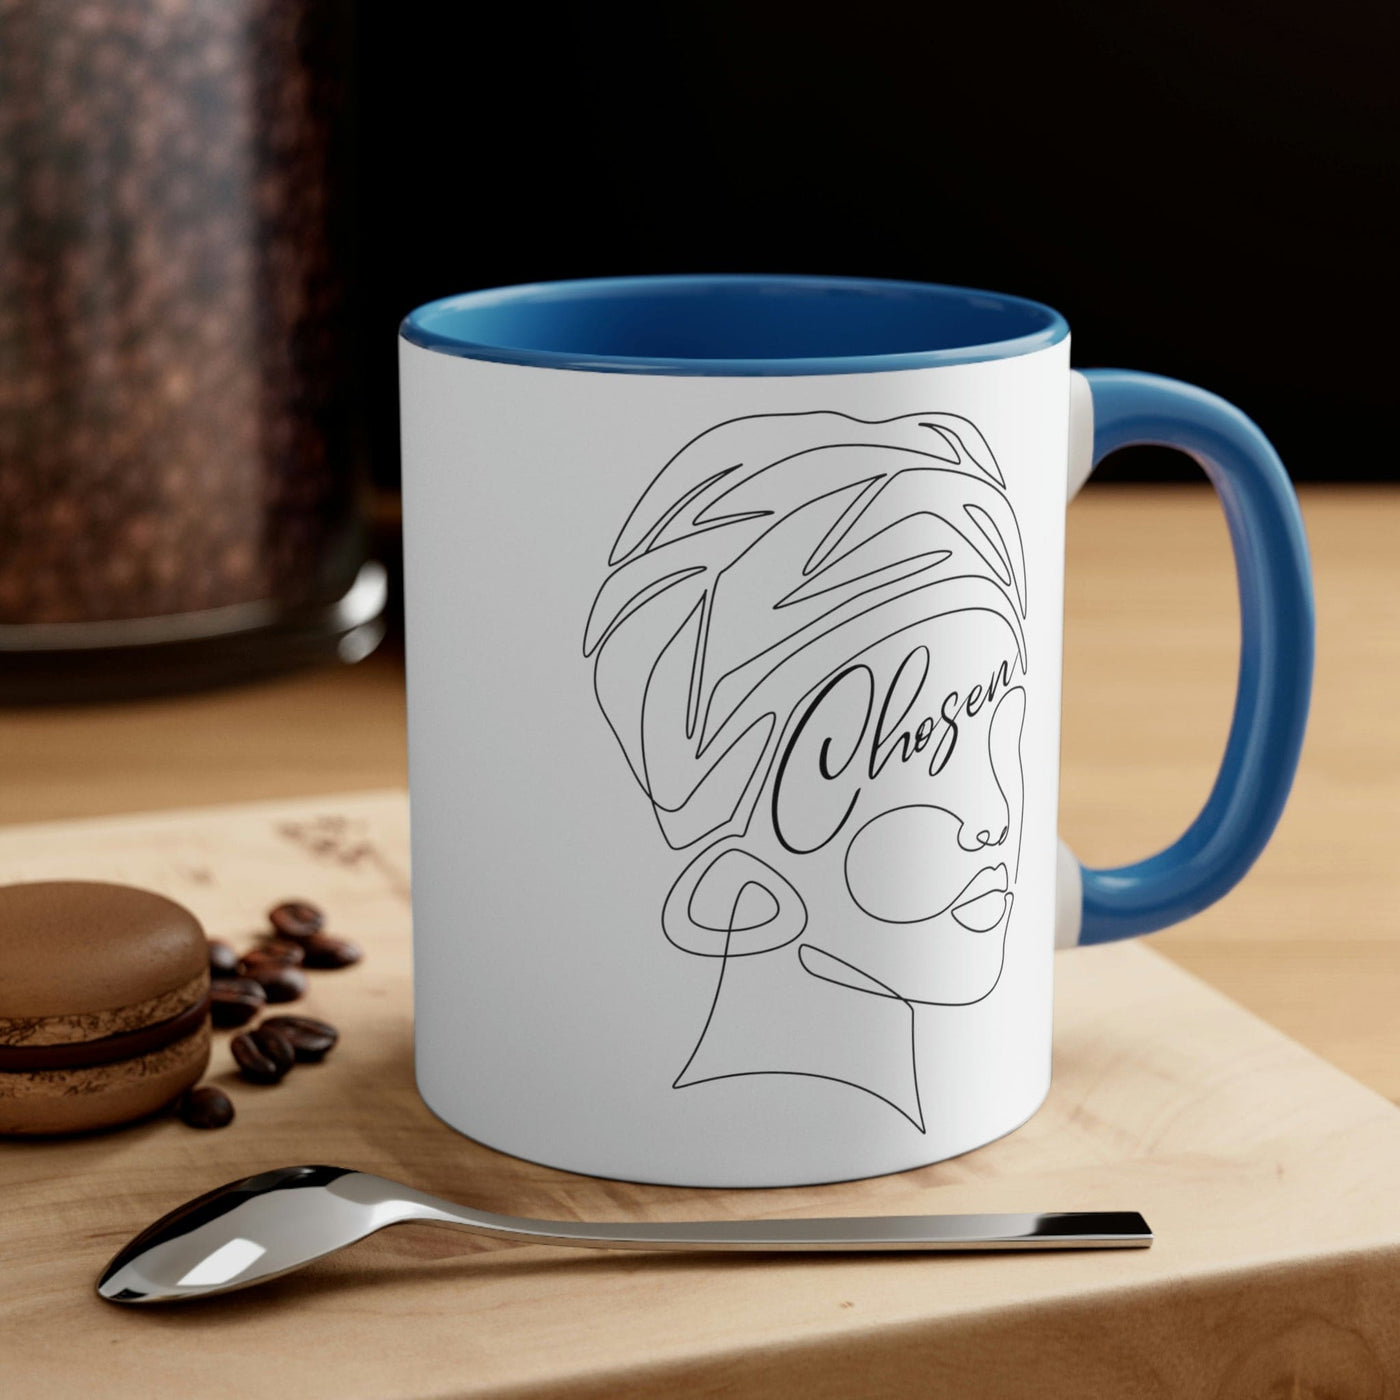 Two-tone Accent Ceramic Mug 11oz Say It Soul - Chosen Illustration Decorative